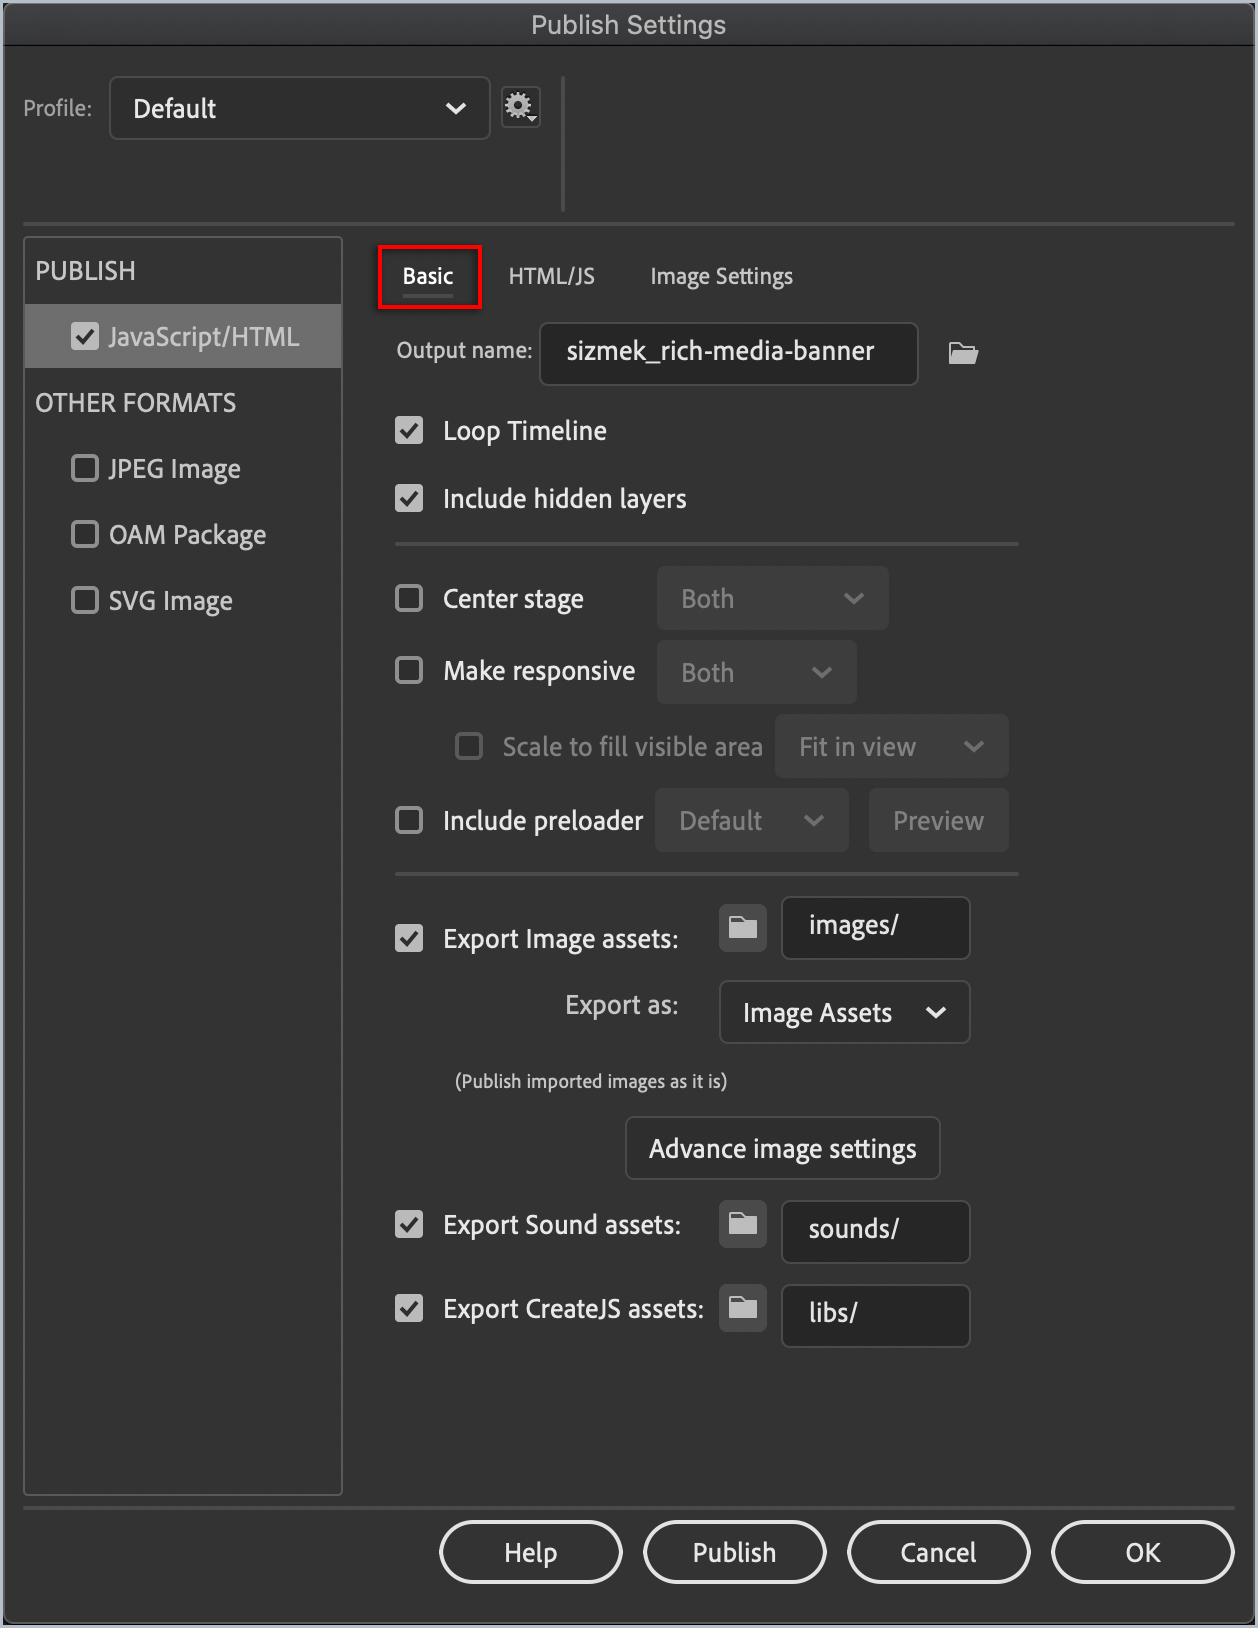 AdobeAnimate_publish-settings_tab-Basic.png